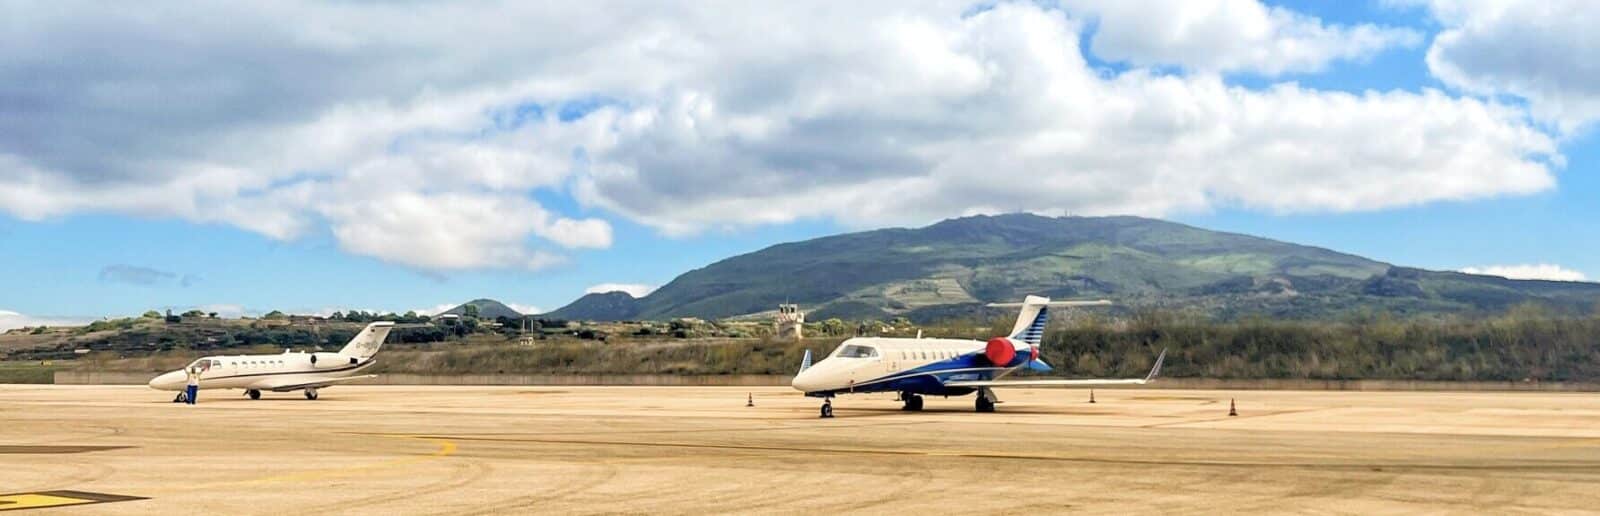 Aviazione Generale Pantelleria